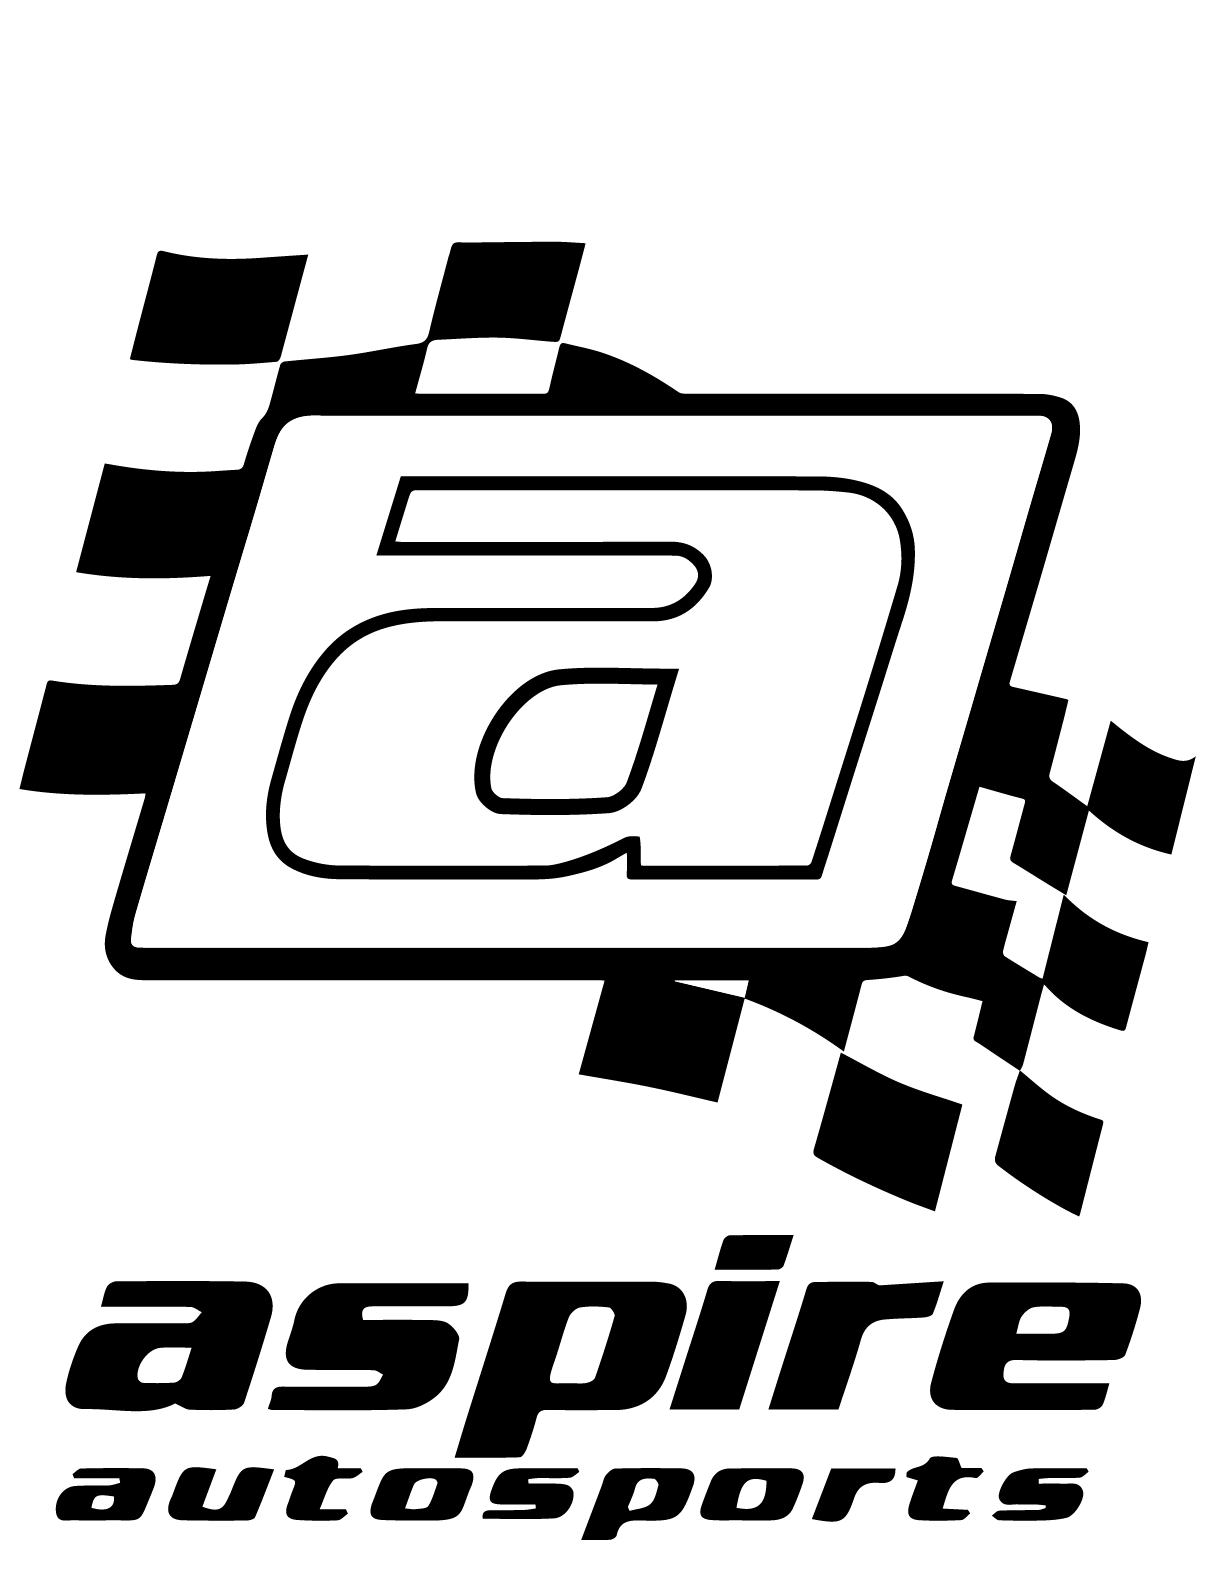 Aspire Autosports logo